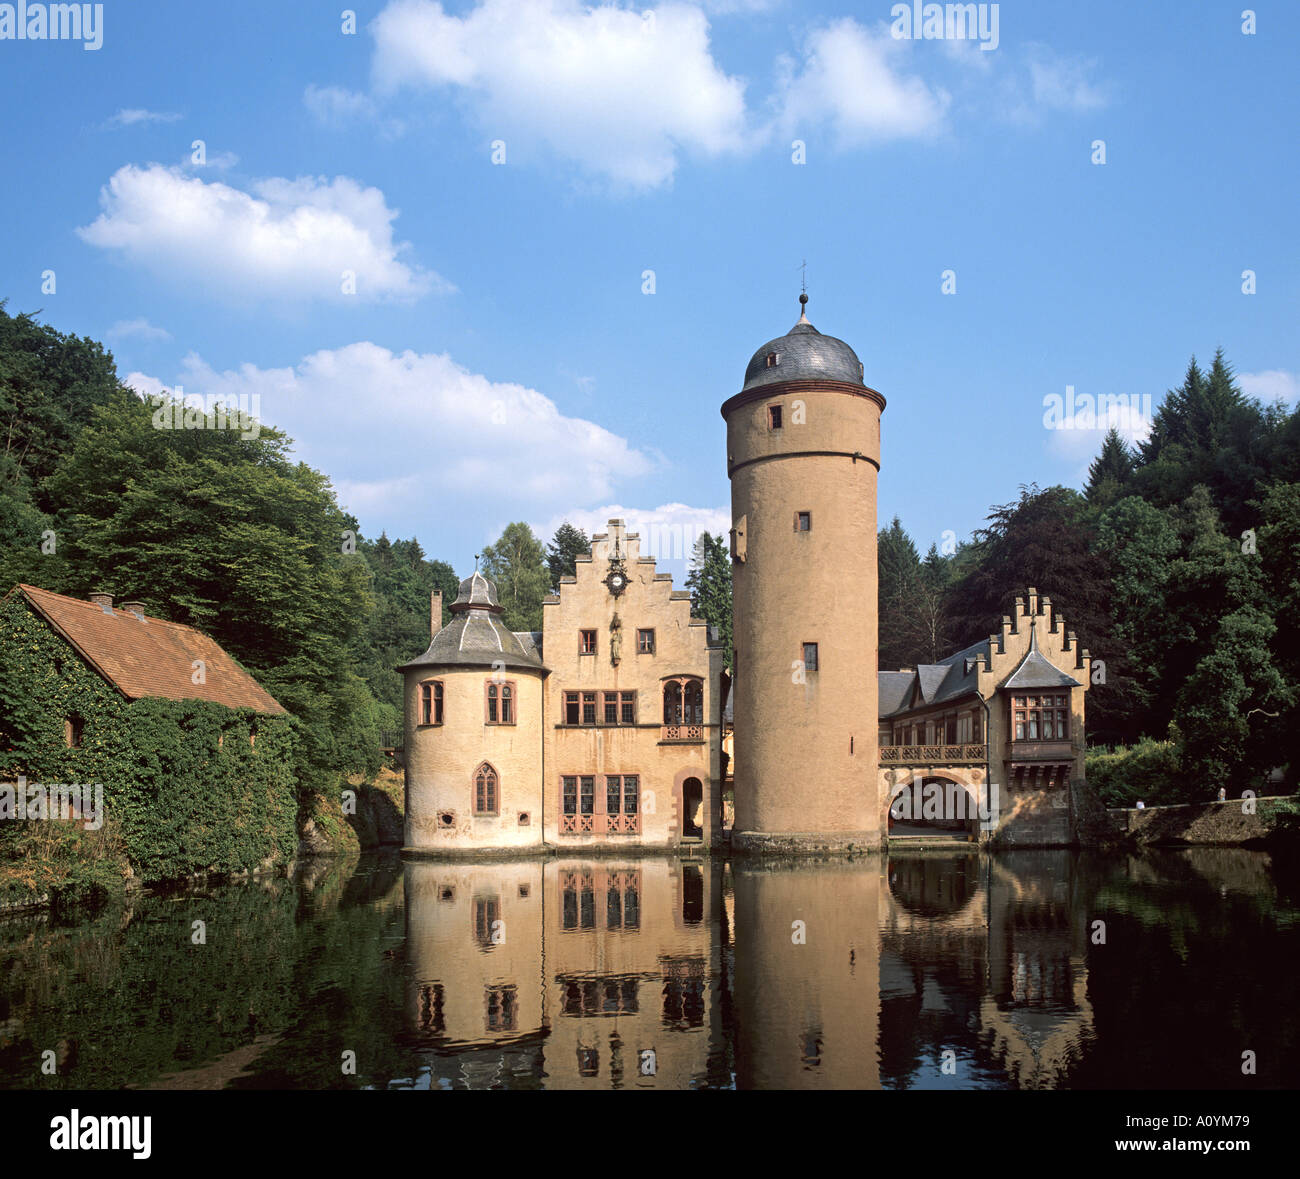 Europa Europe Germany Deutschland Bayern Bavaria Mespelbrunn Schloss Castle Stock Photo